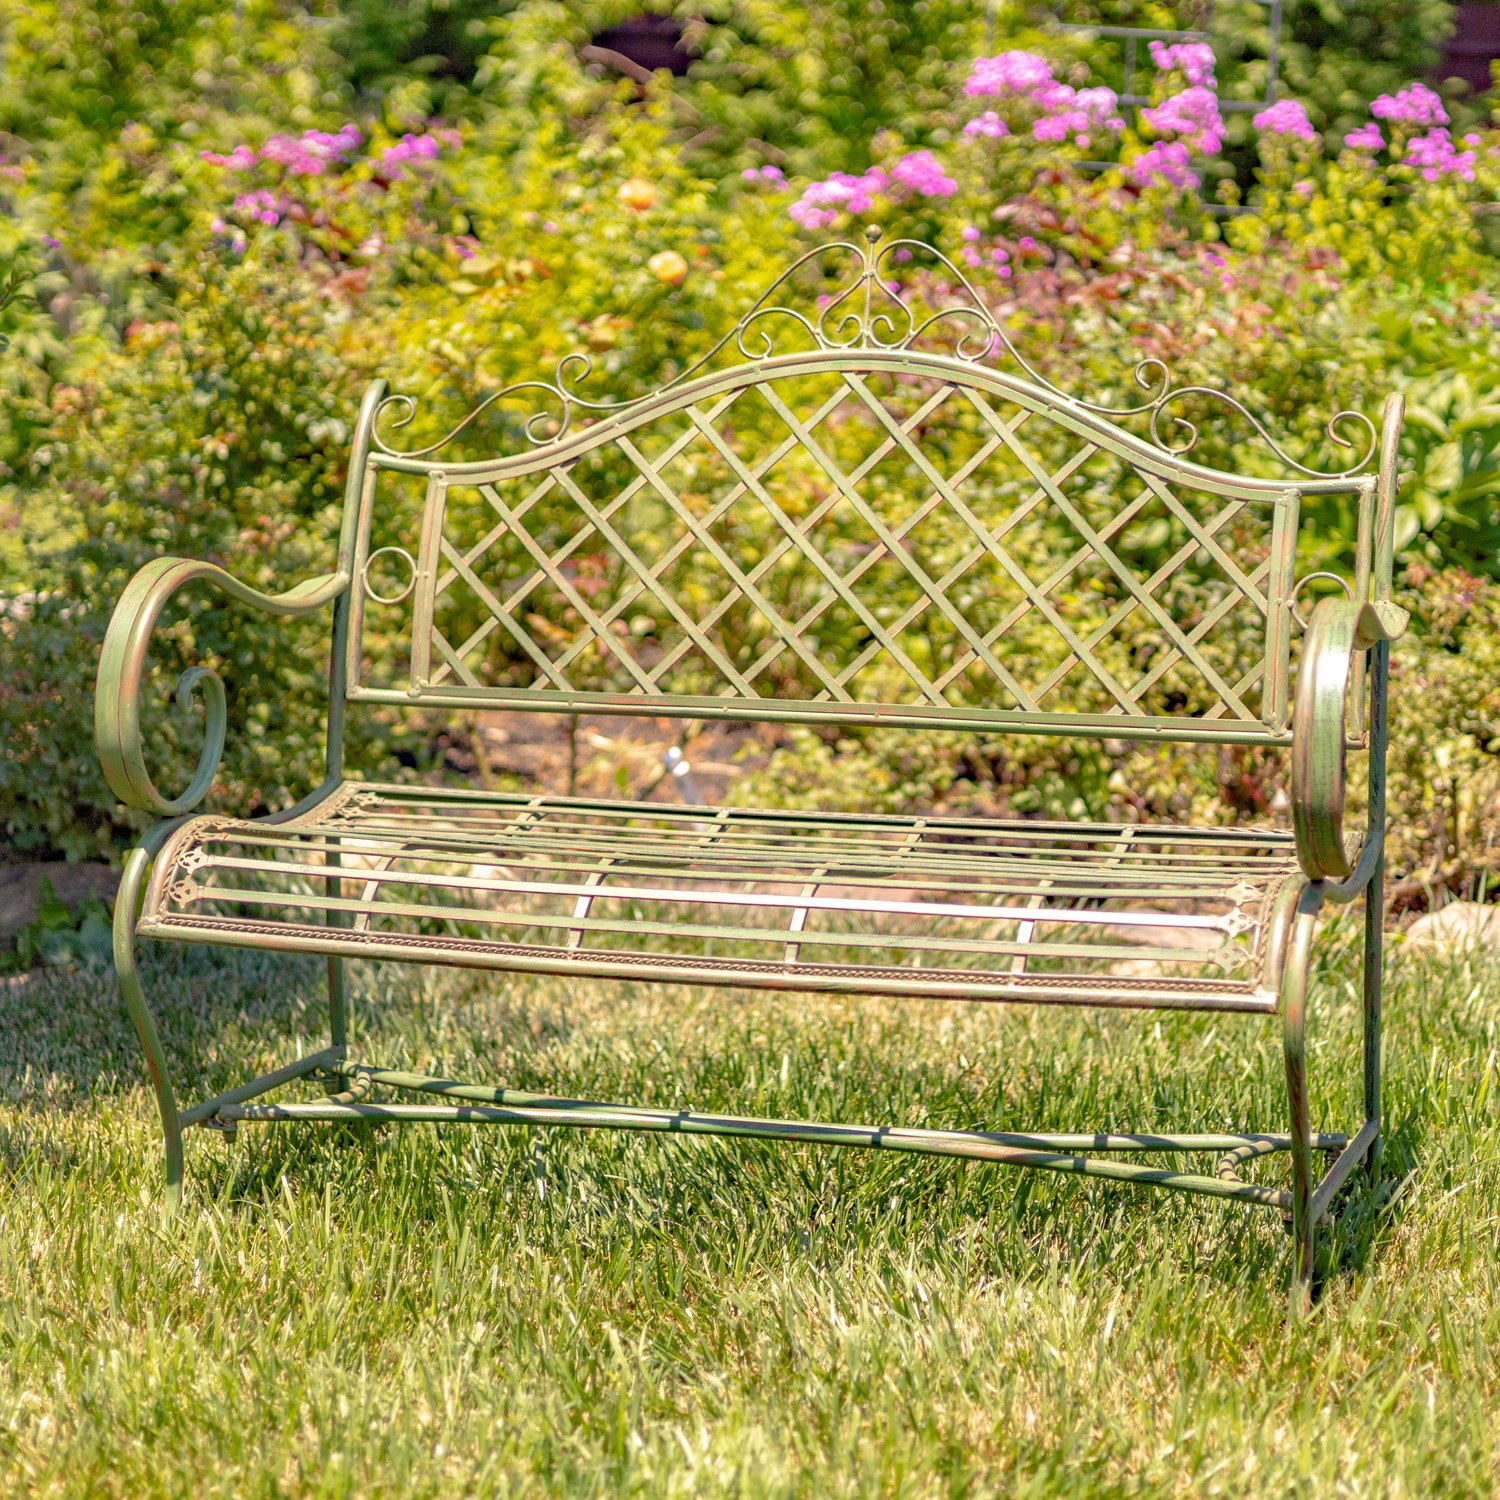 Zaer Ltd. International "Stephania" Victorian-Style Iron Garden Bench in Antique Green ZR090517-GR